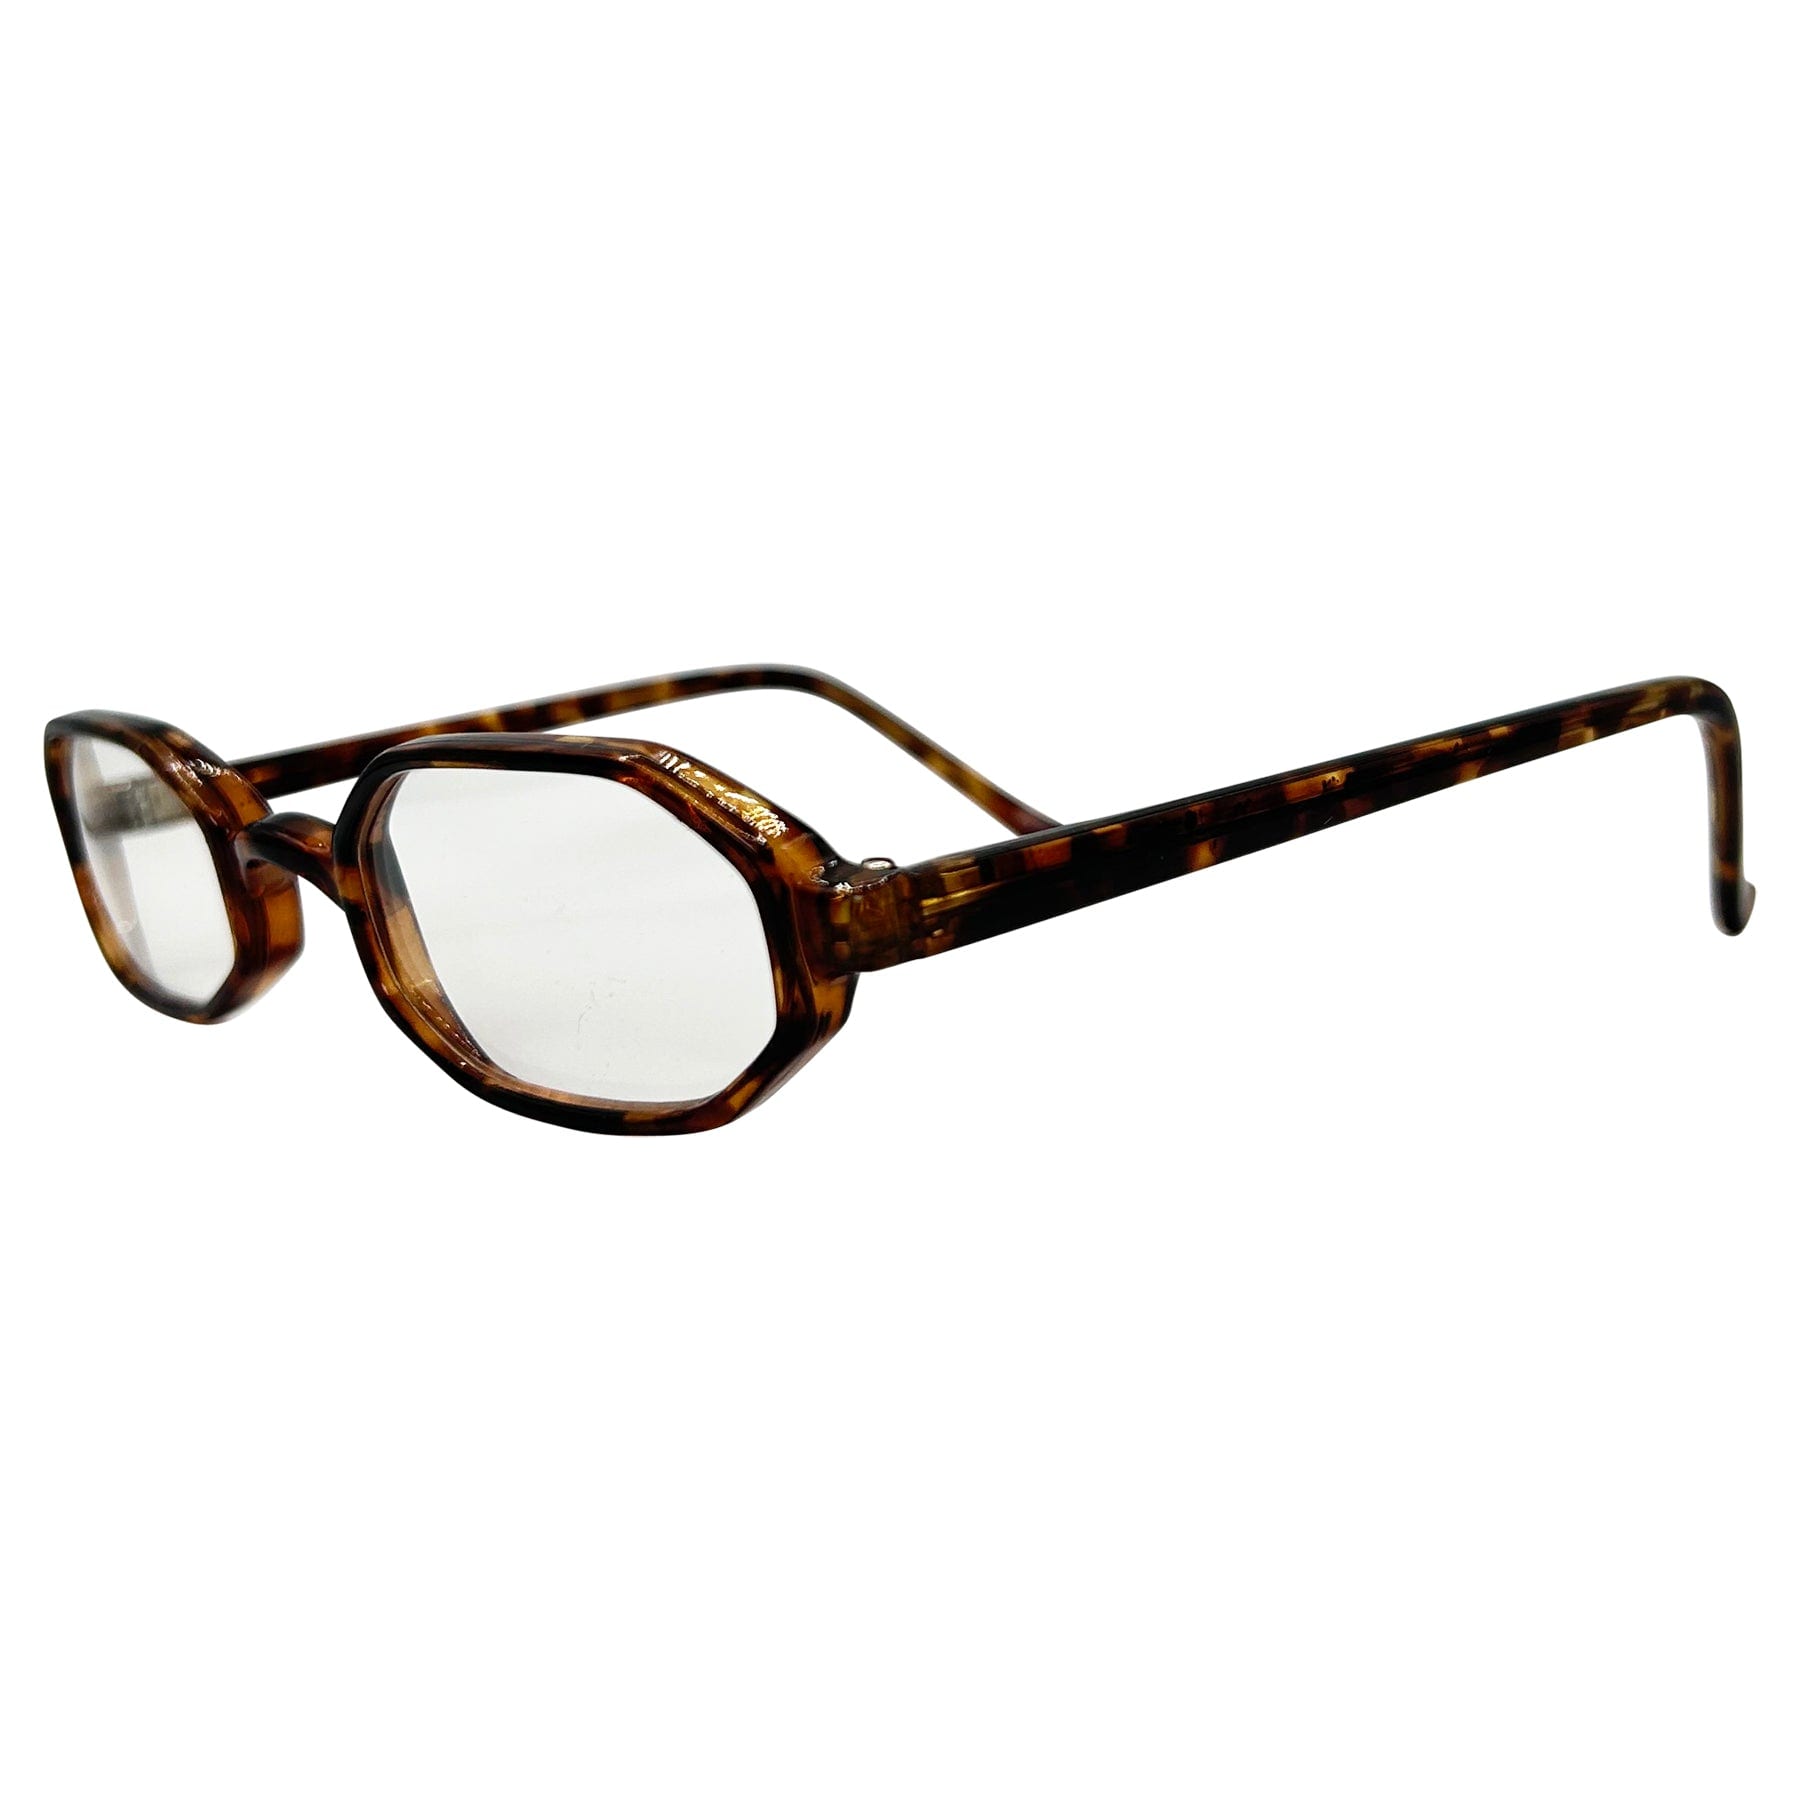 PINE Tortoise Clear Bayonetta-Style 90s Glasses